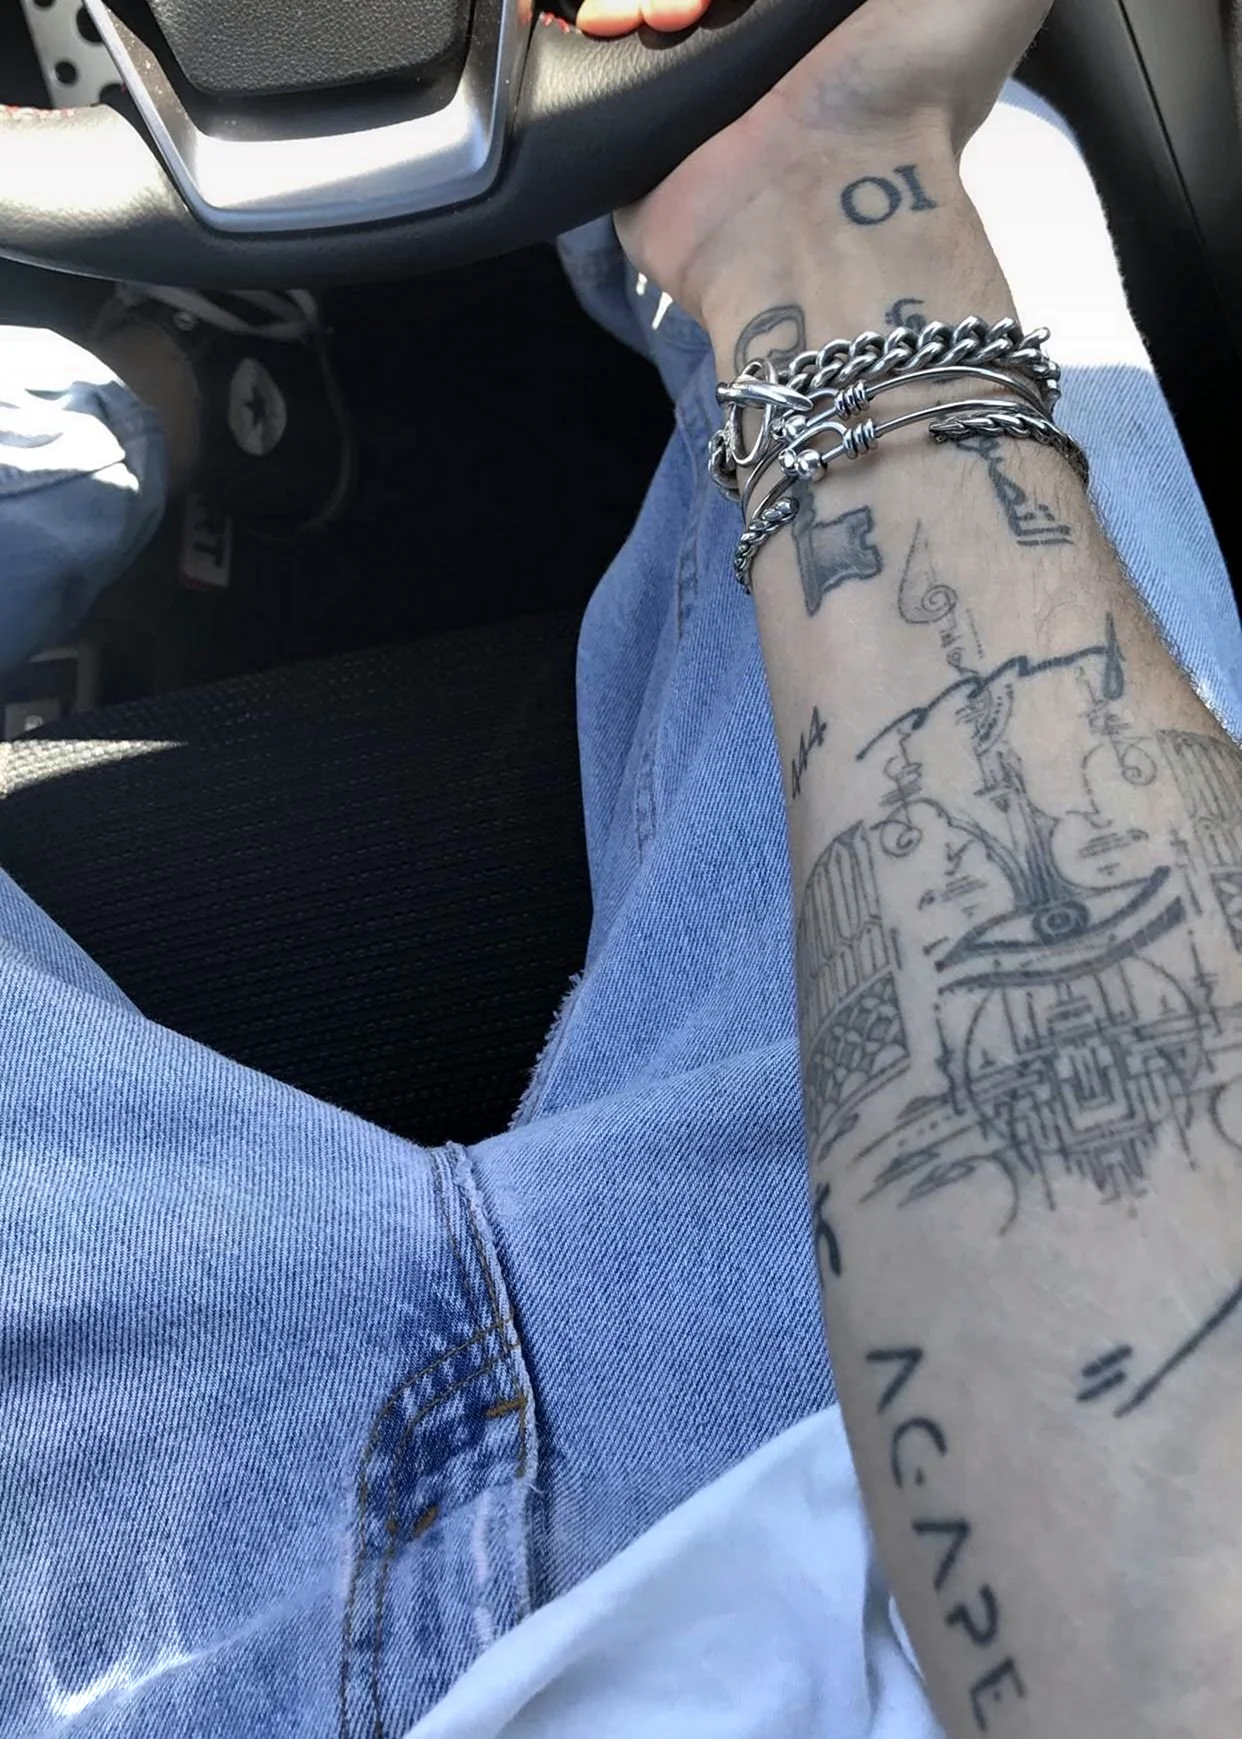 Татуированная рука на руле